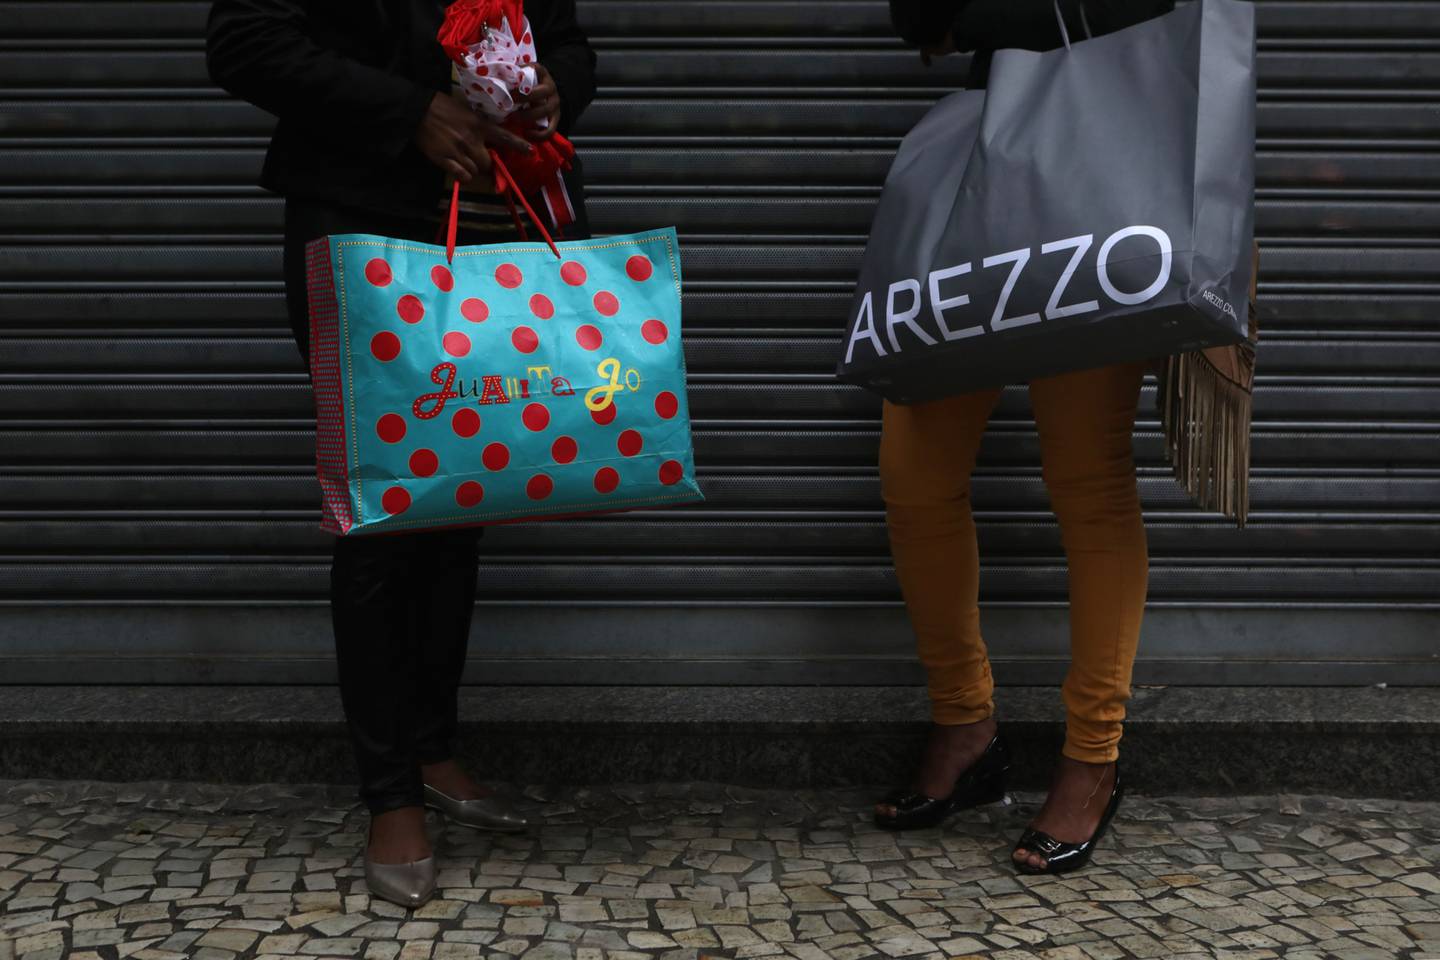 Shoppers hold Juanita Jo and Arezzo bags in downtown Rio de Janeiro